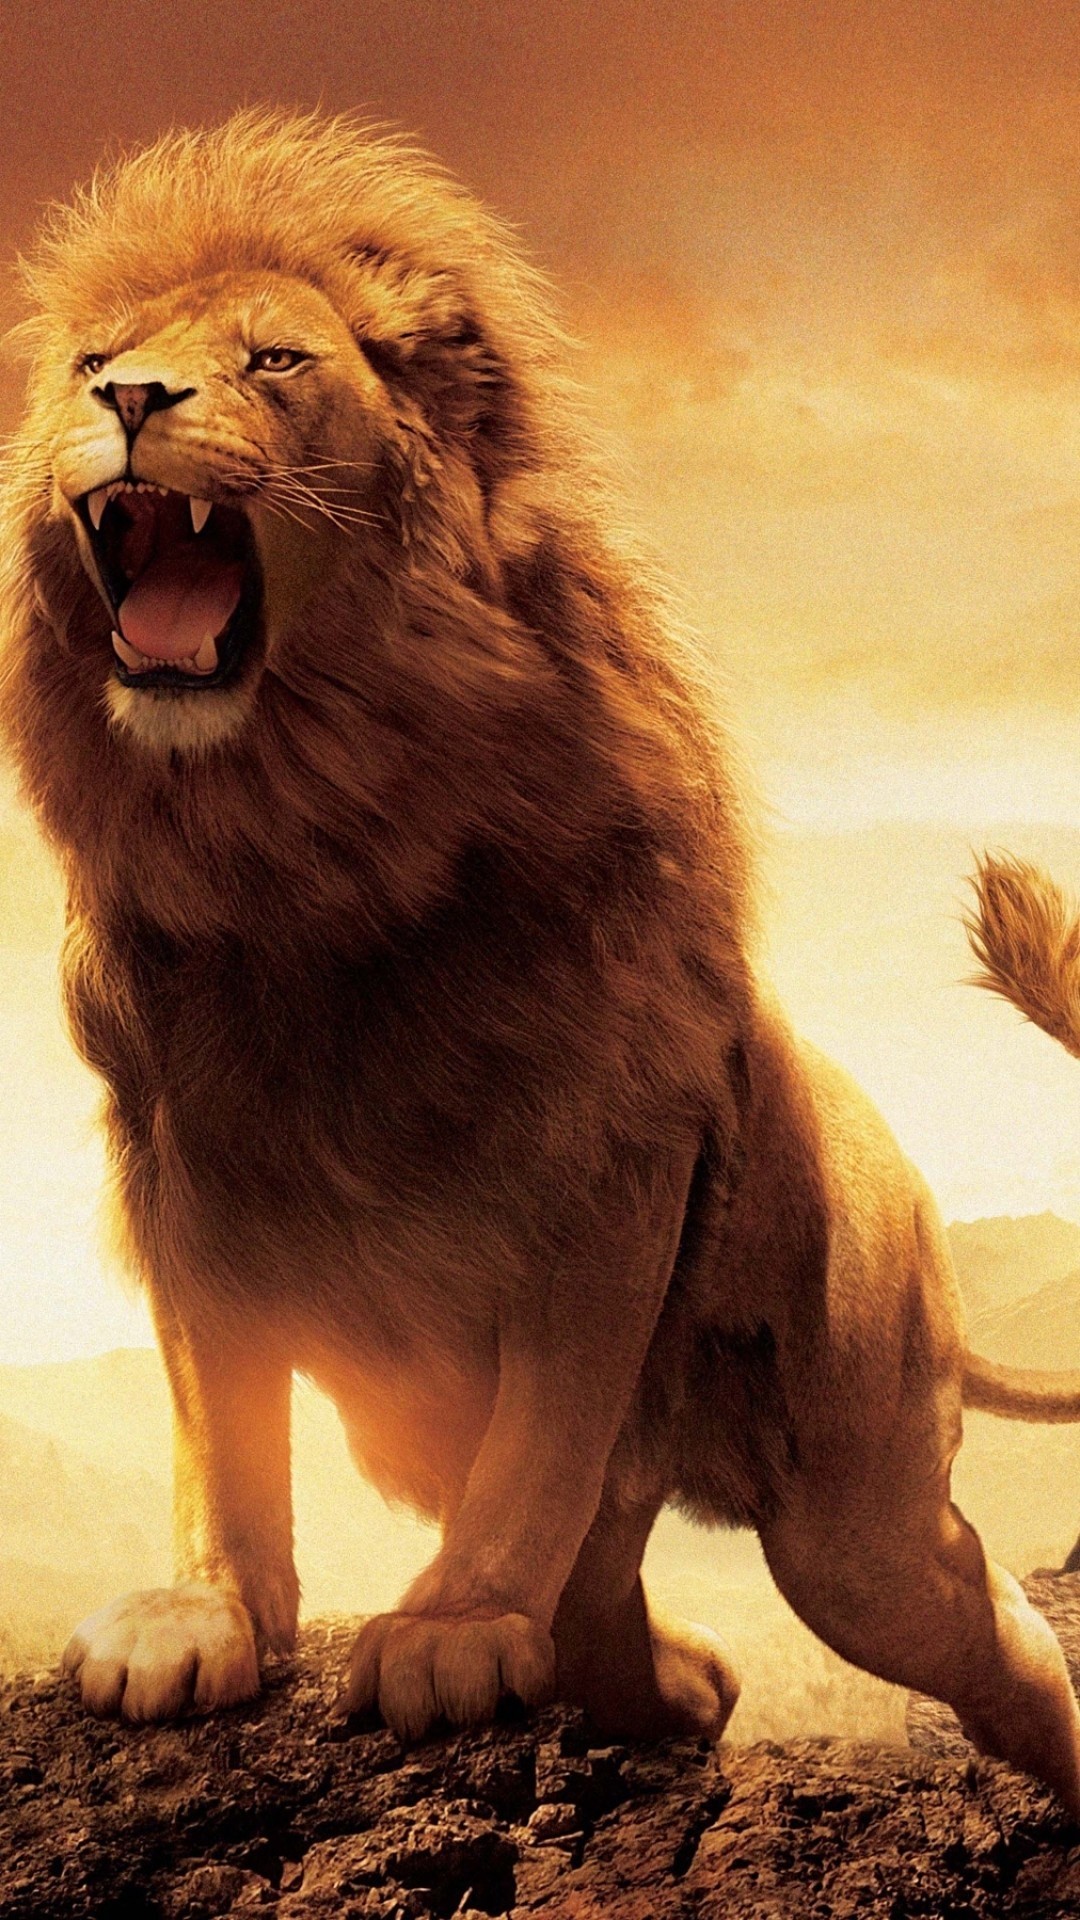 1080x1920 Roaring Lion Wallpaper 67 43 Images